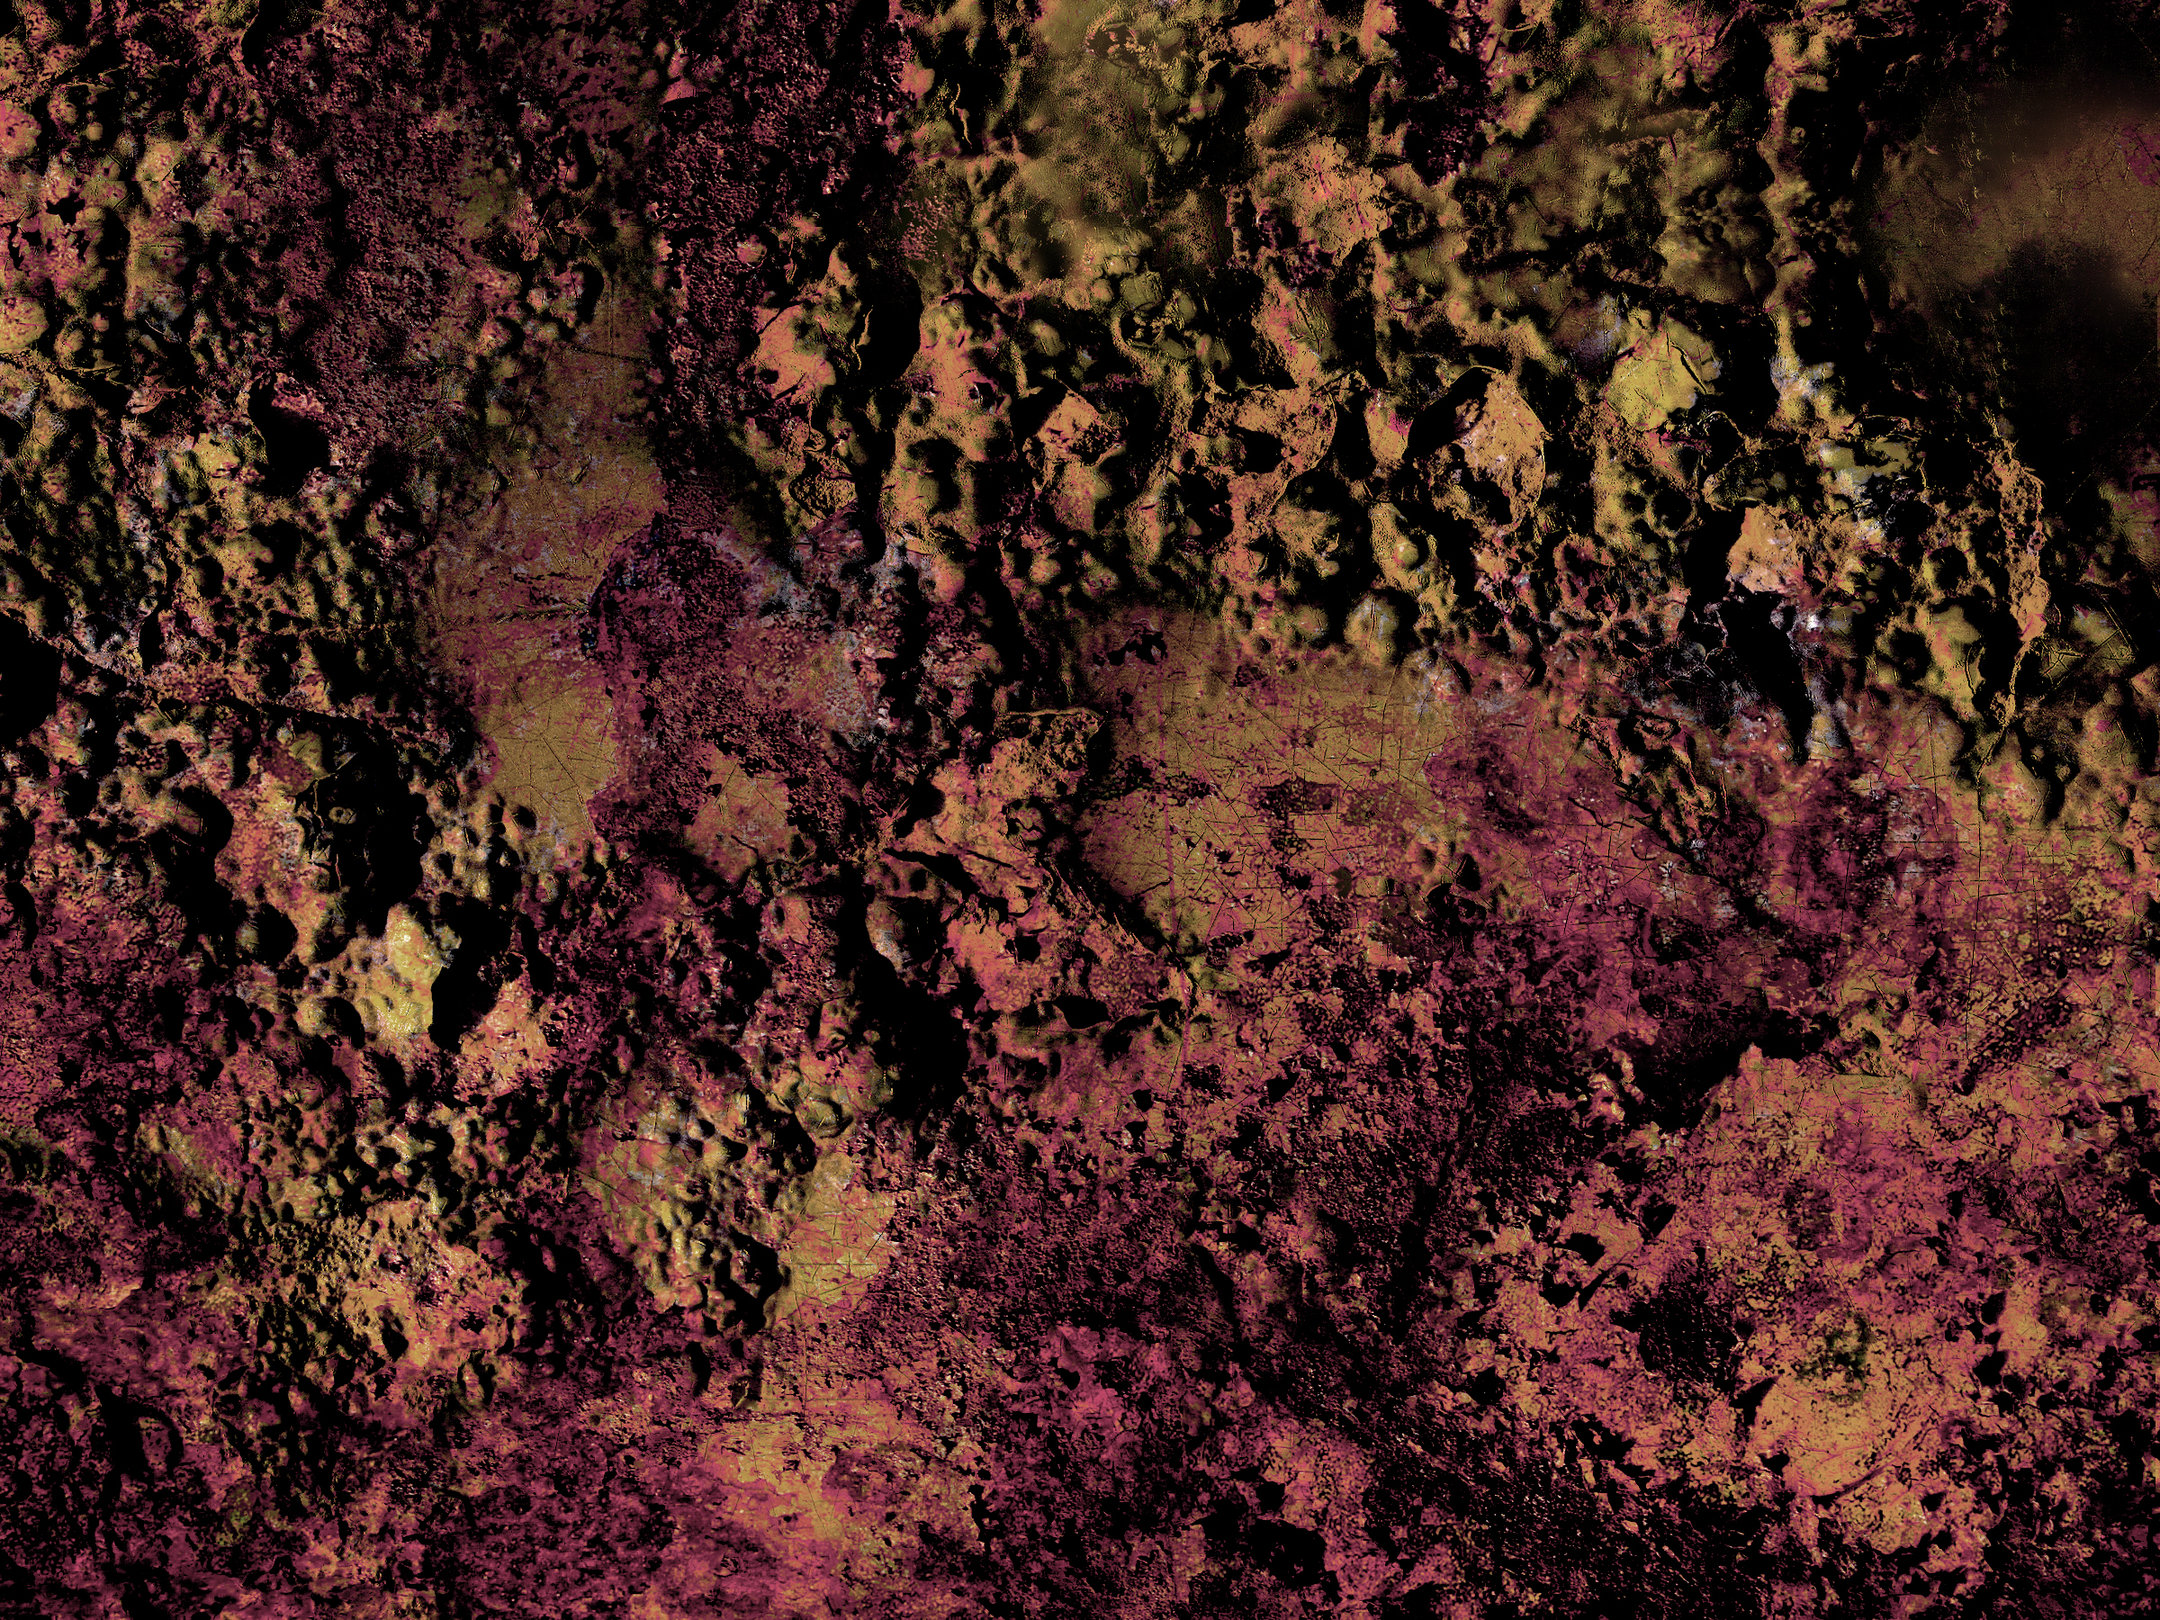 Planet Rust Texture by DemosthenesVoice on DeviantArt